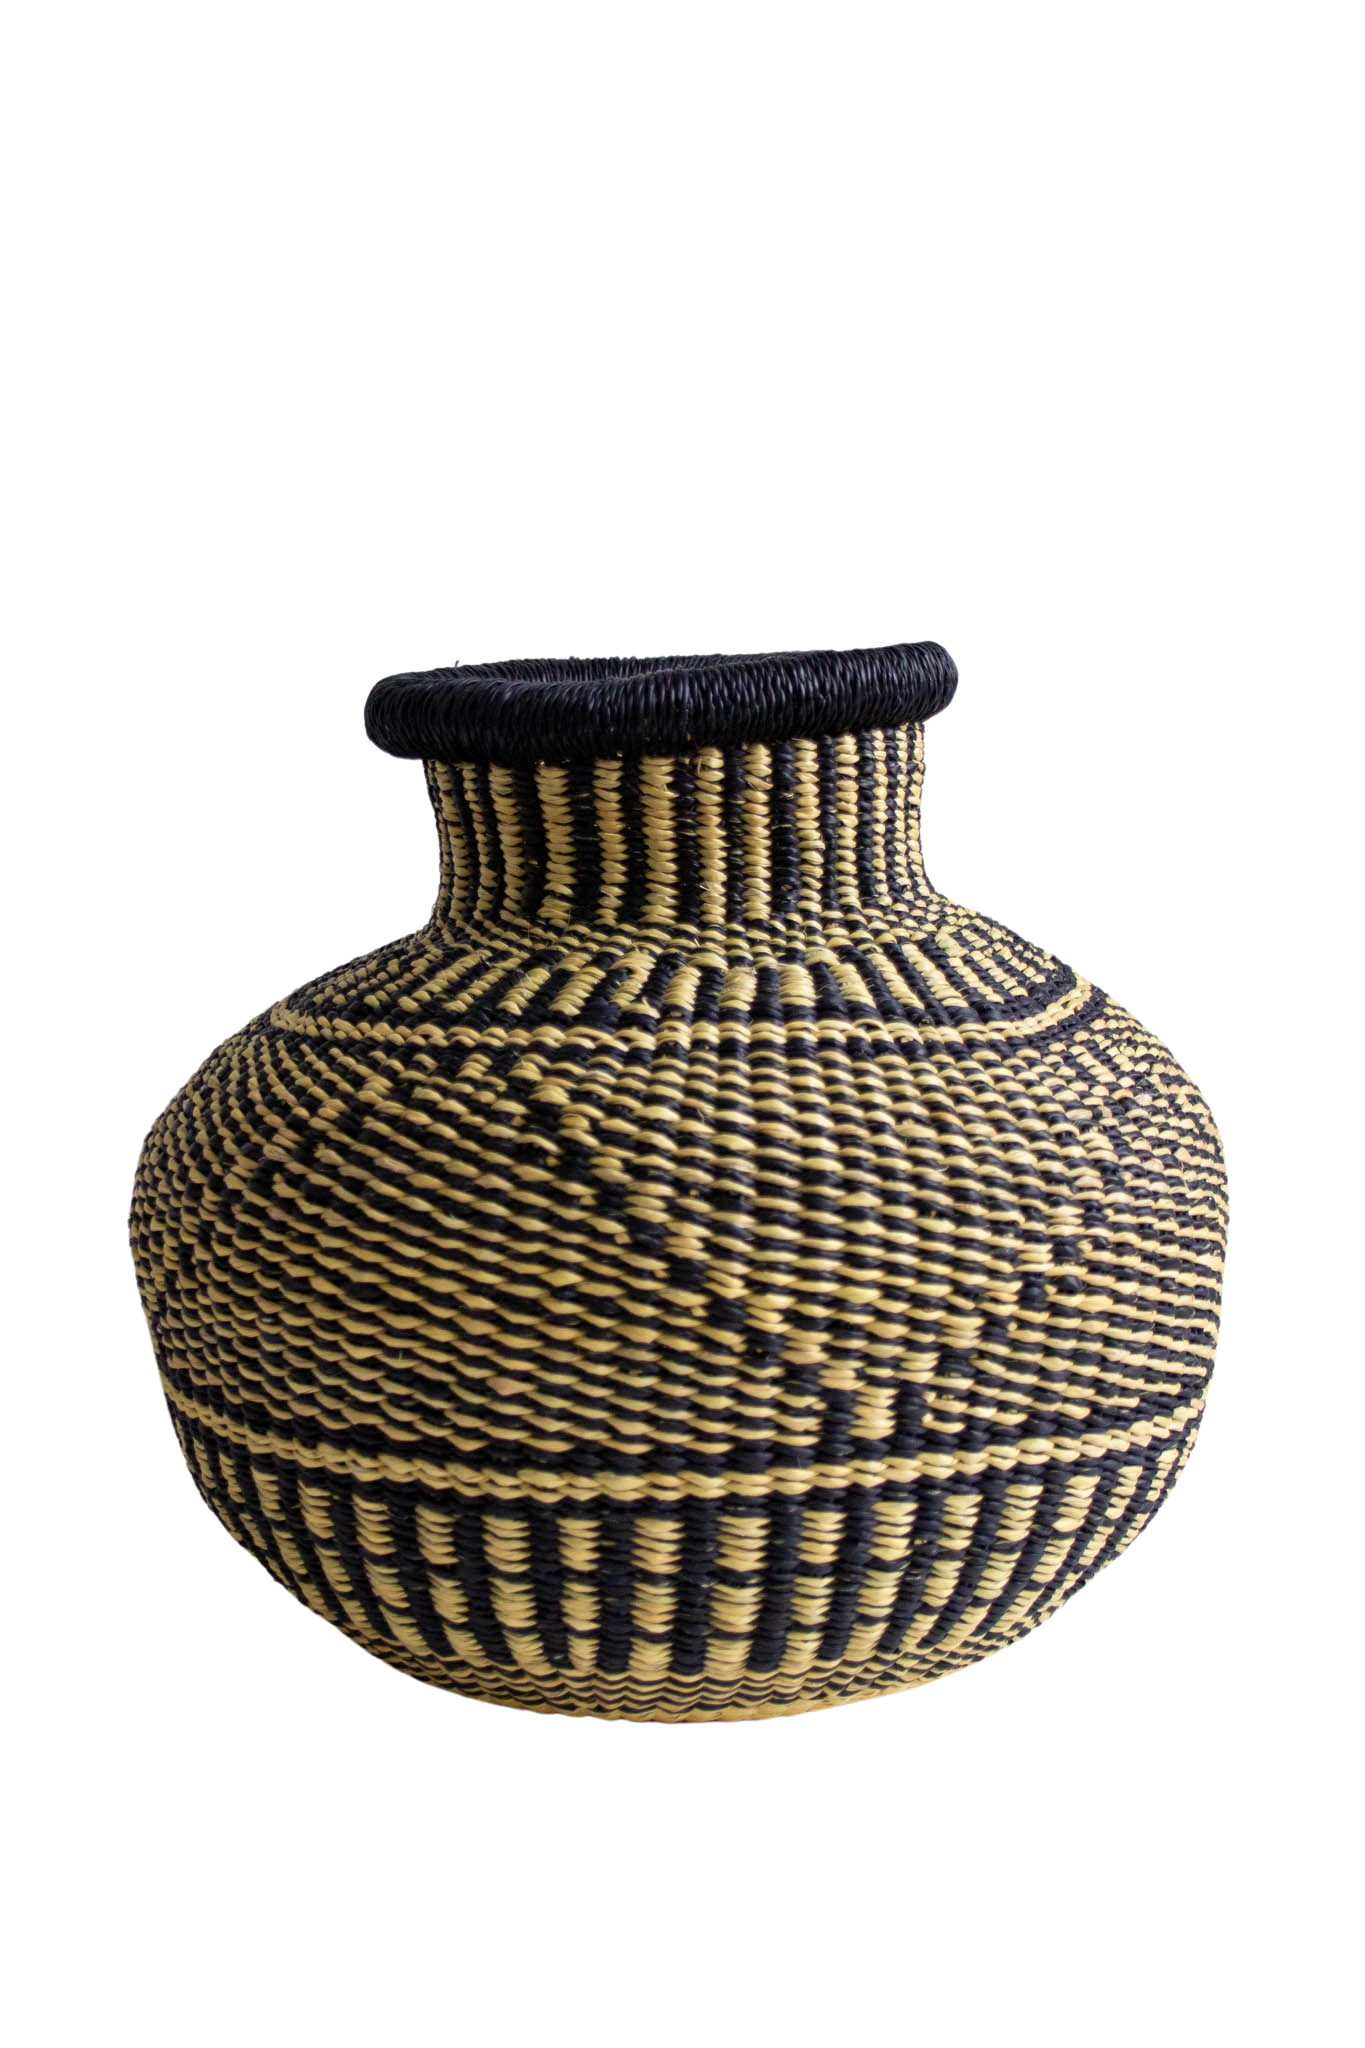 African basket Tiny Jemima B&W of natural fiber